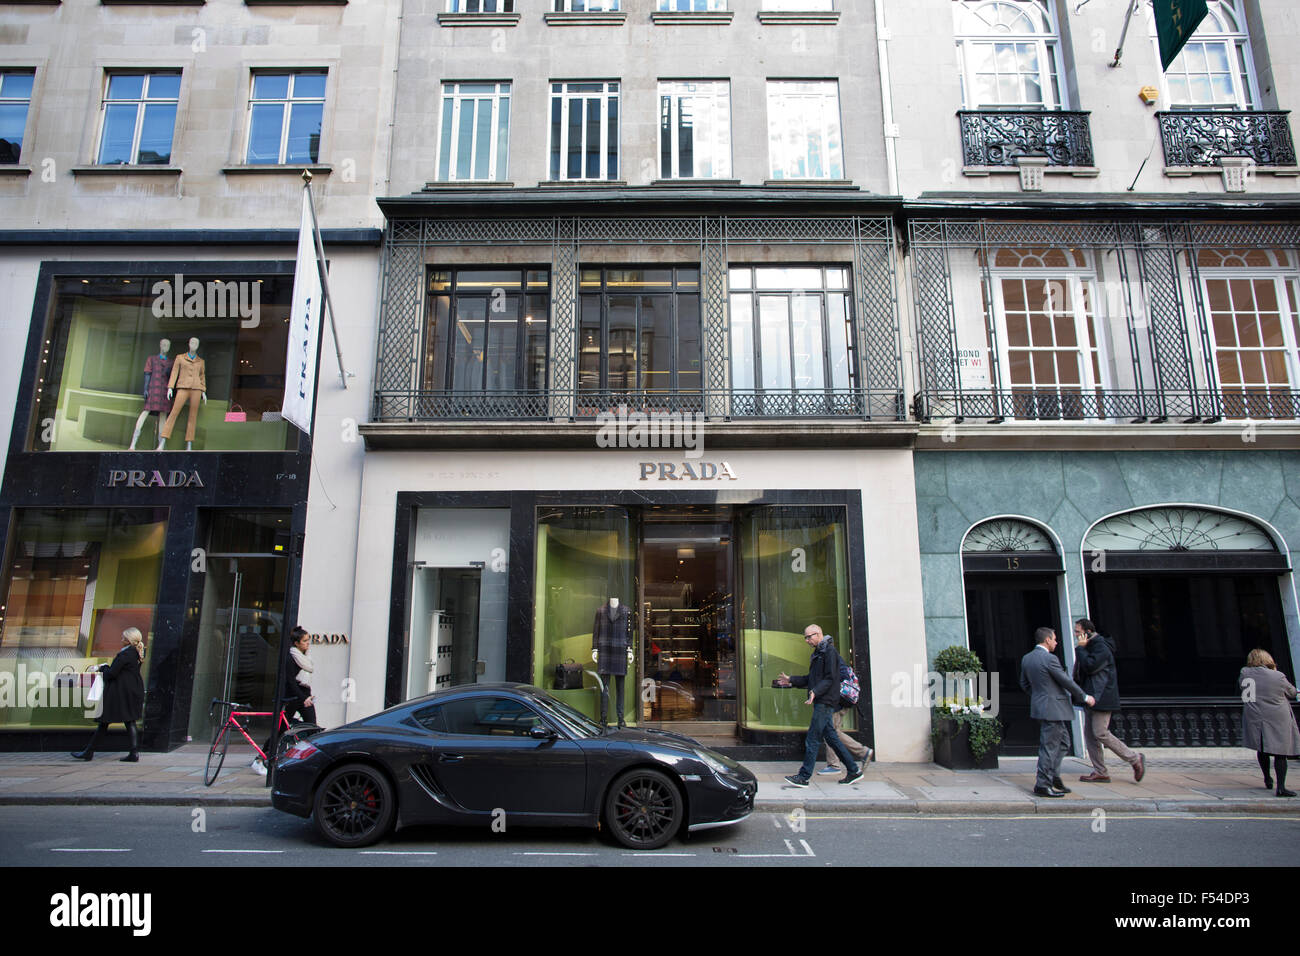 Prada, Old Bond Street, London, UK 